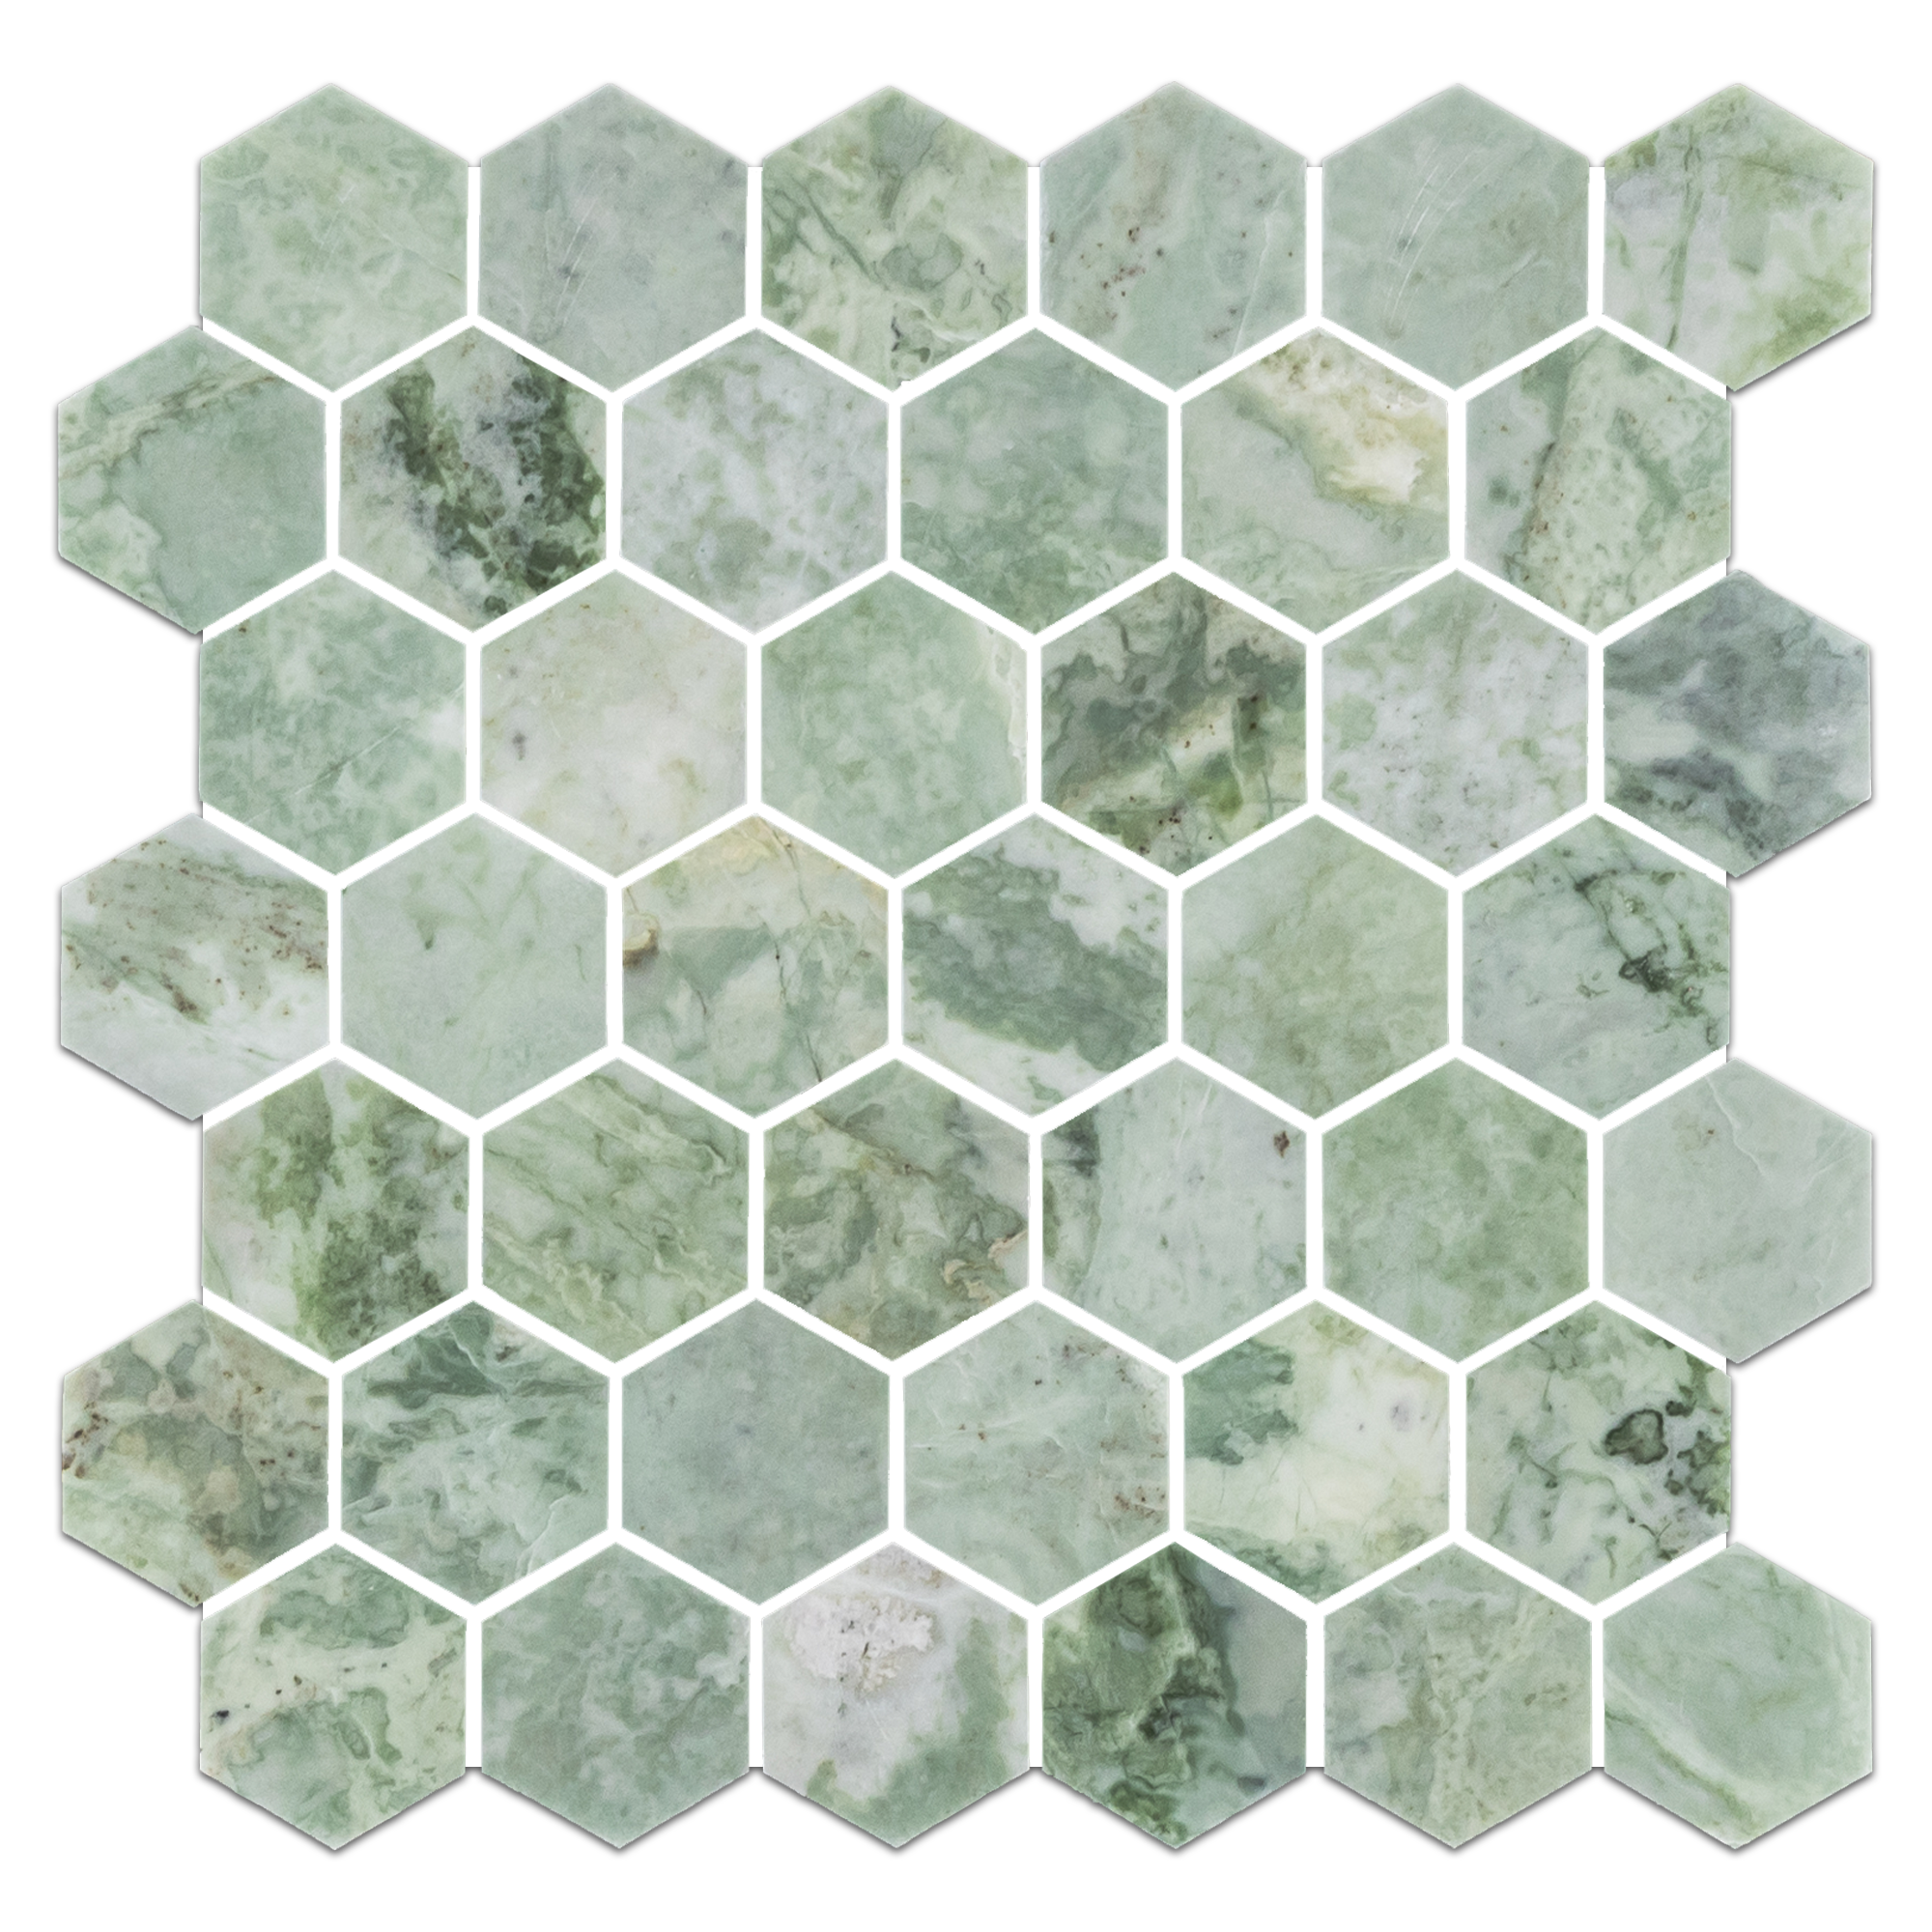 Elon emerald green marble 2 hexagon field mosaic 11.75x11.9375x0.375 polished AM6614P Surface Group International product